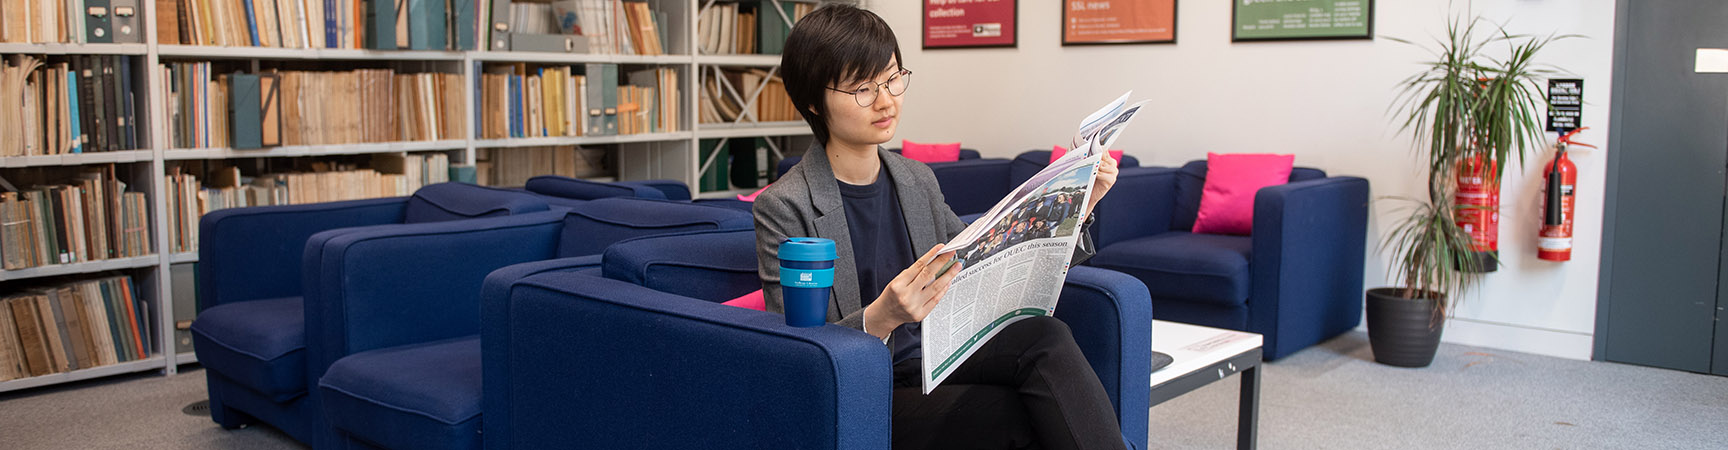 A woman reading a newspaper on a blue sofa